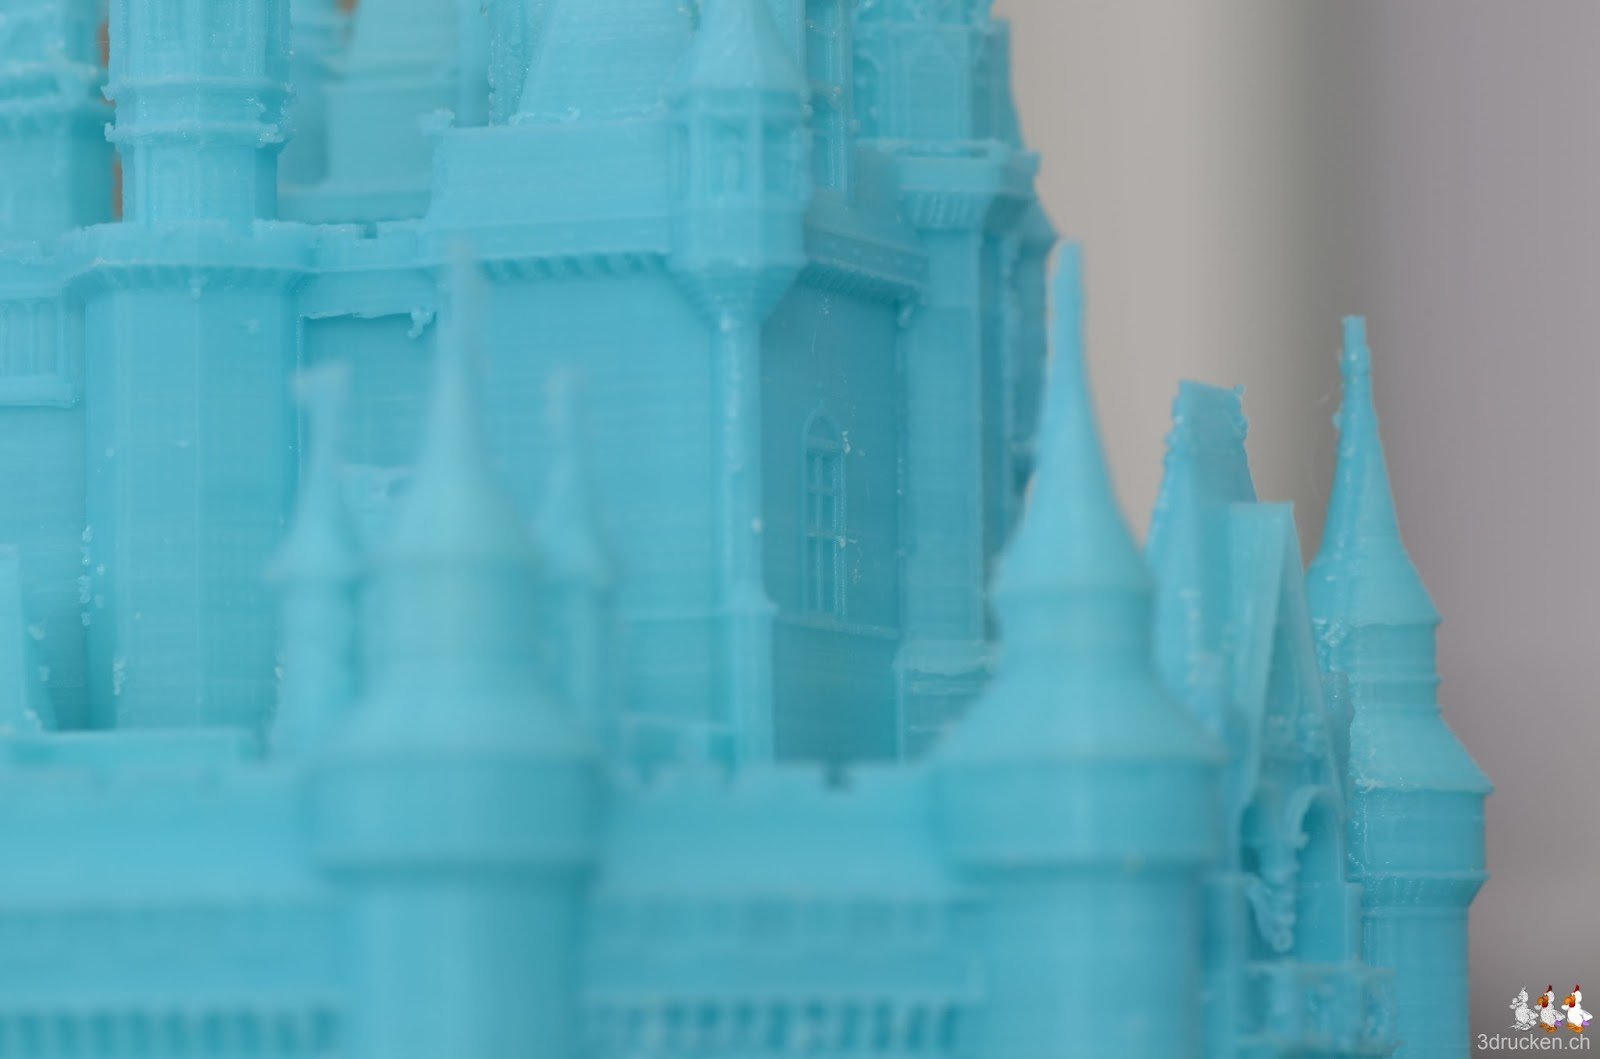 Disney Schloss mit netfabb Studio repariert